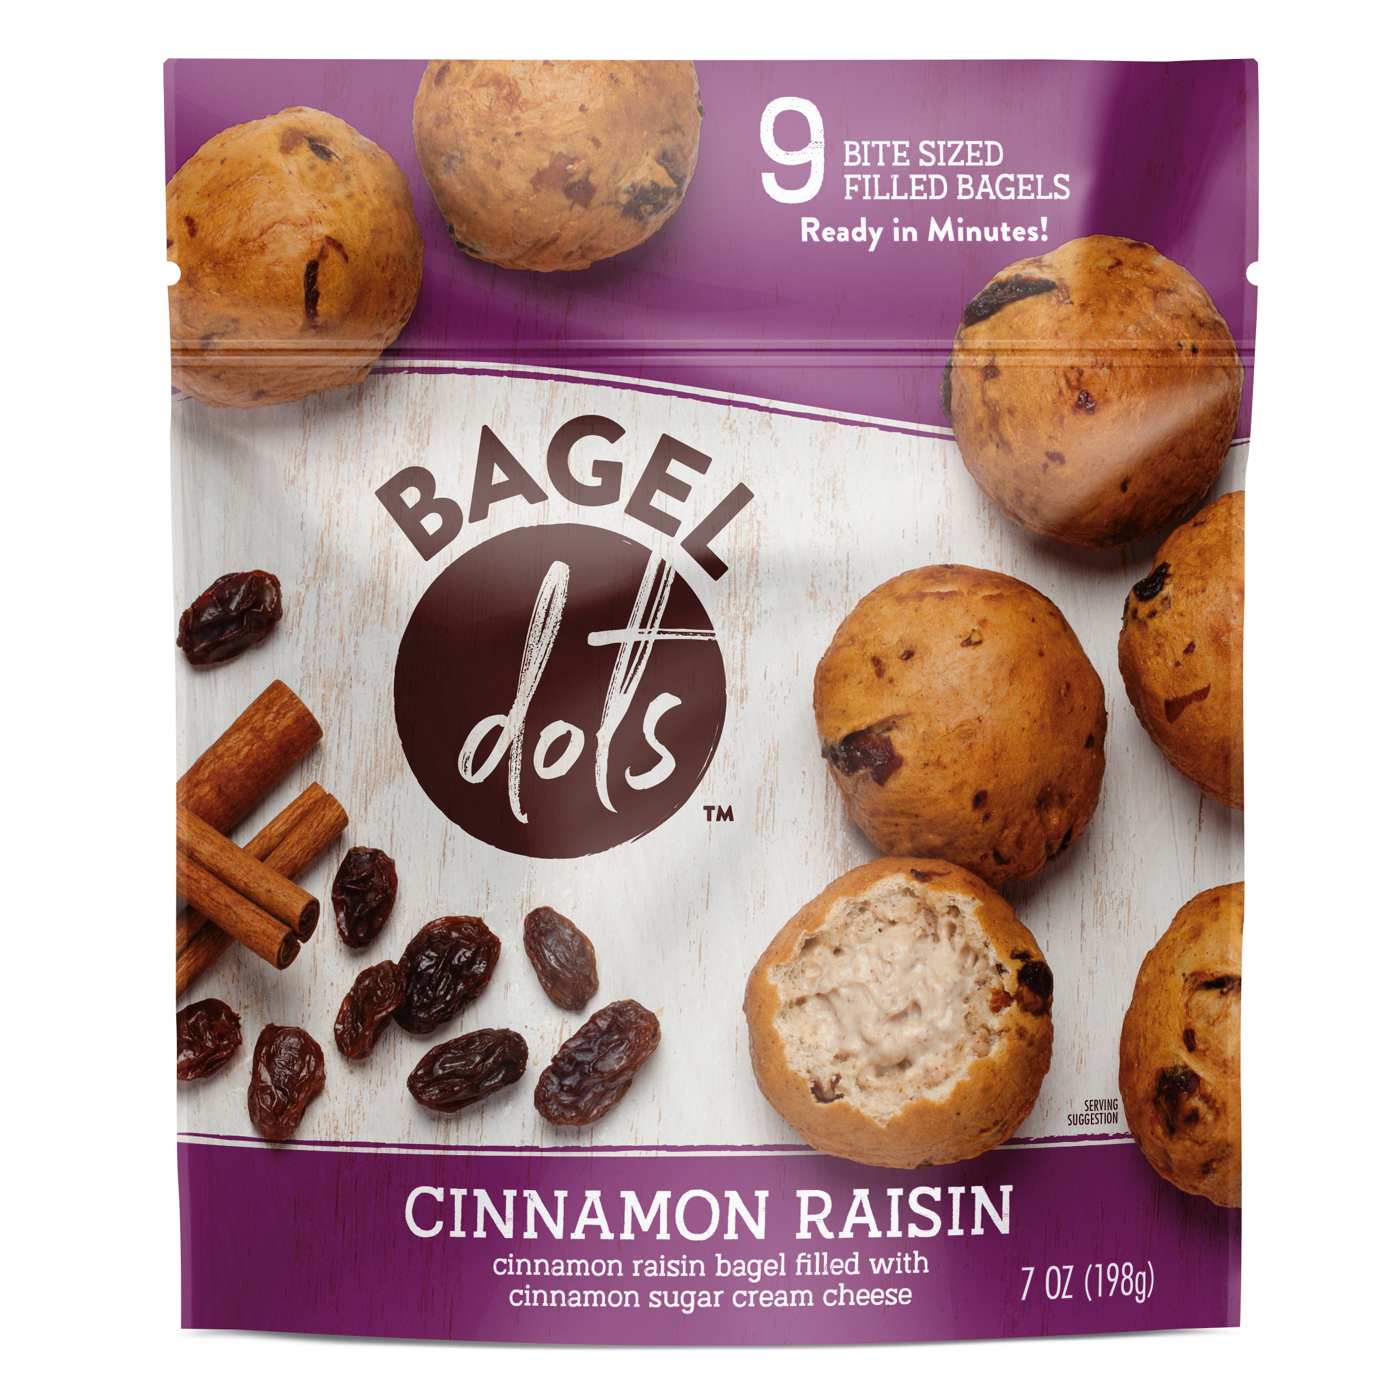 Bagel Dots Cinnamon Raisin; image 1 of 3